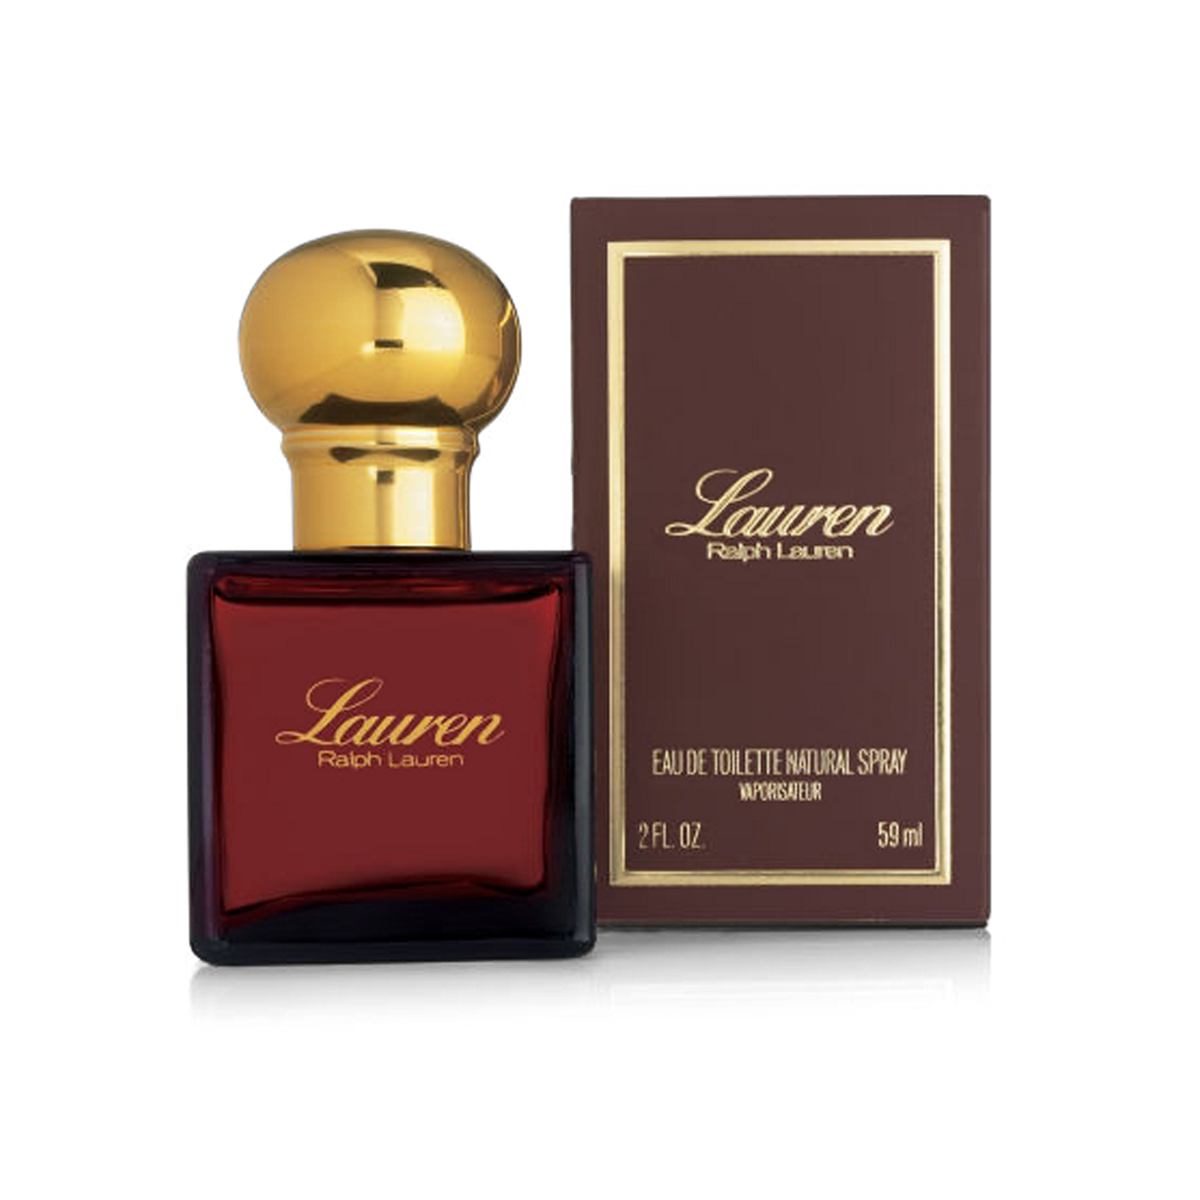 Lauren Women's Perfume By Ralph Lauren 2oz/59ml Eau De Toilette Spray